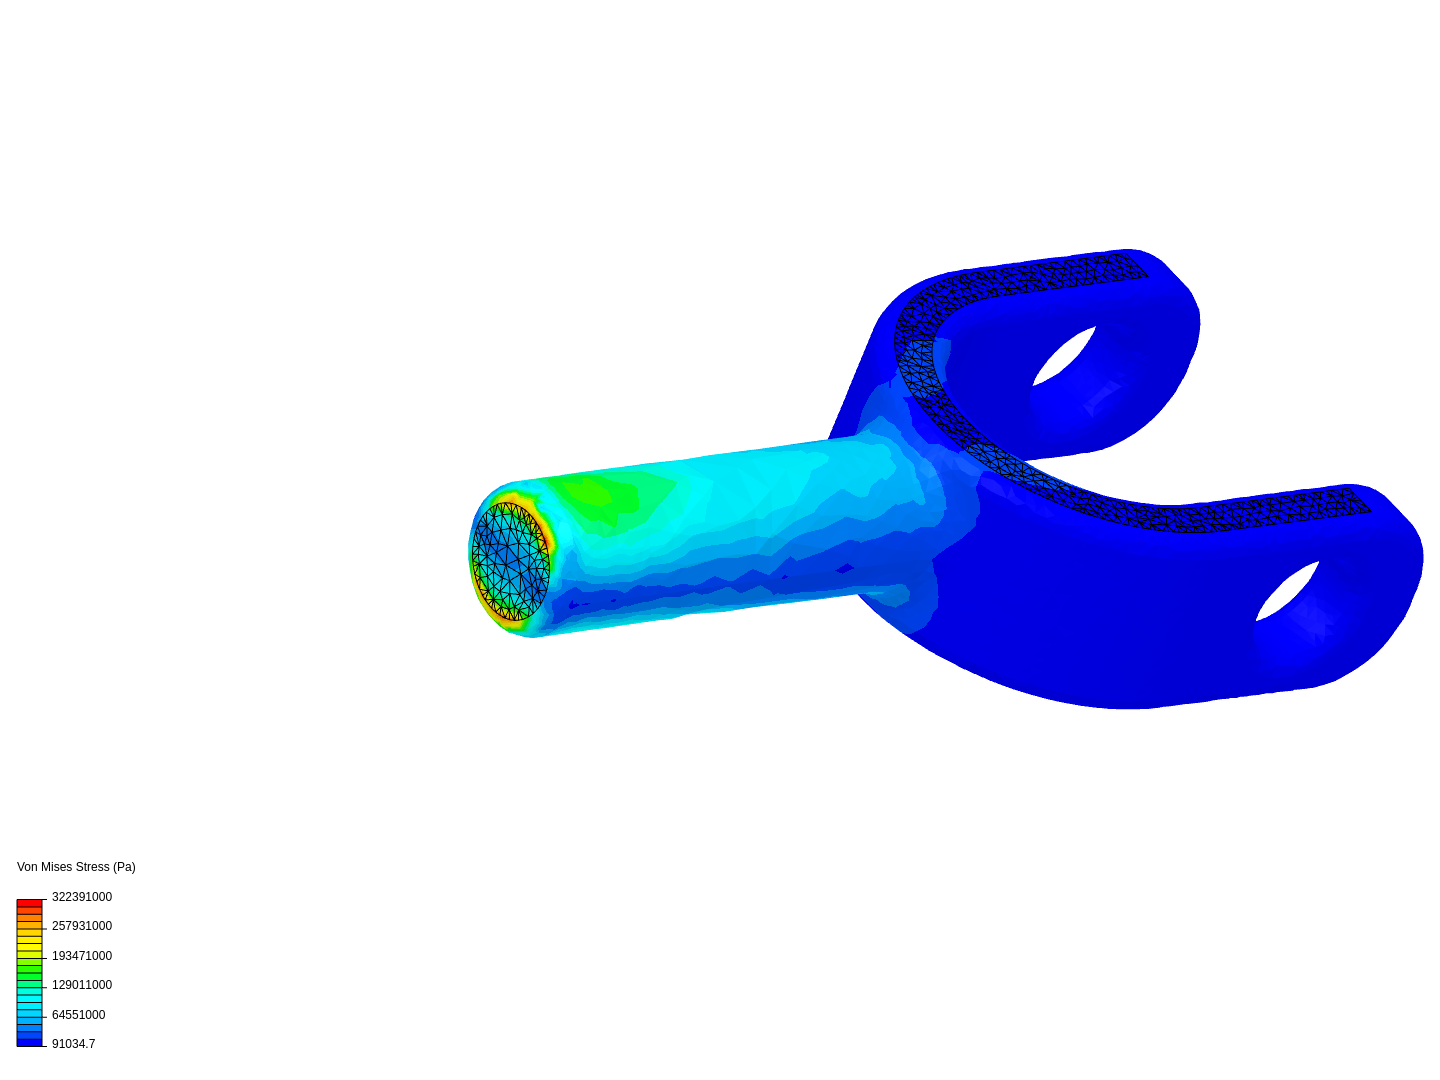 Propeller optimization image